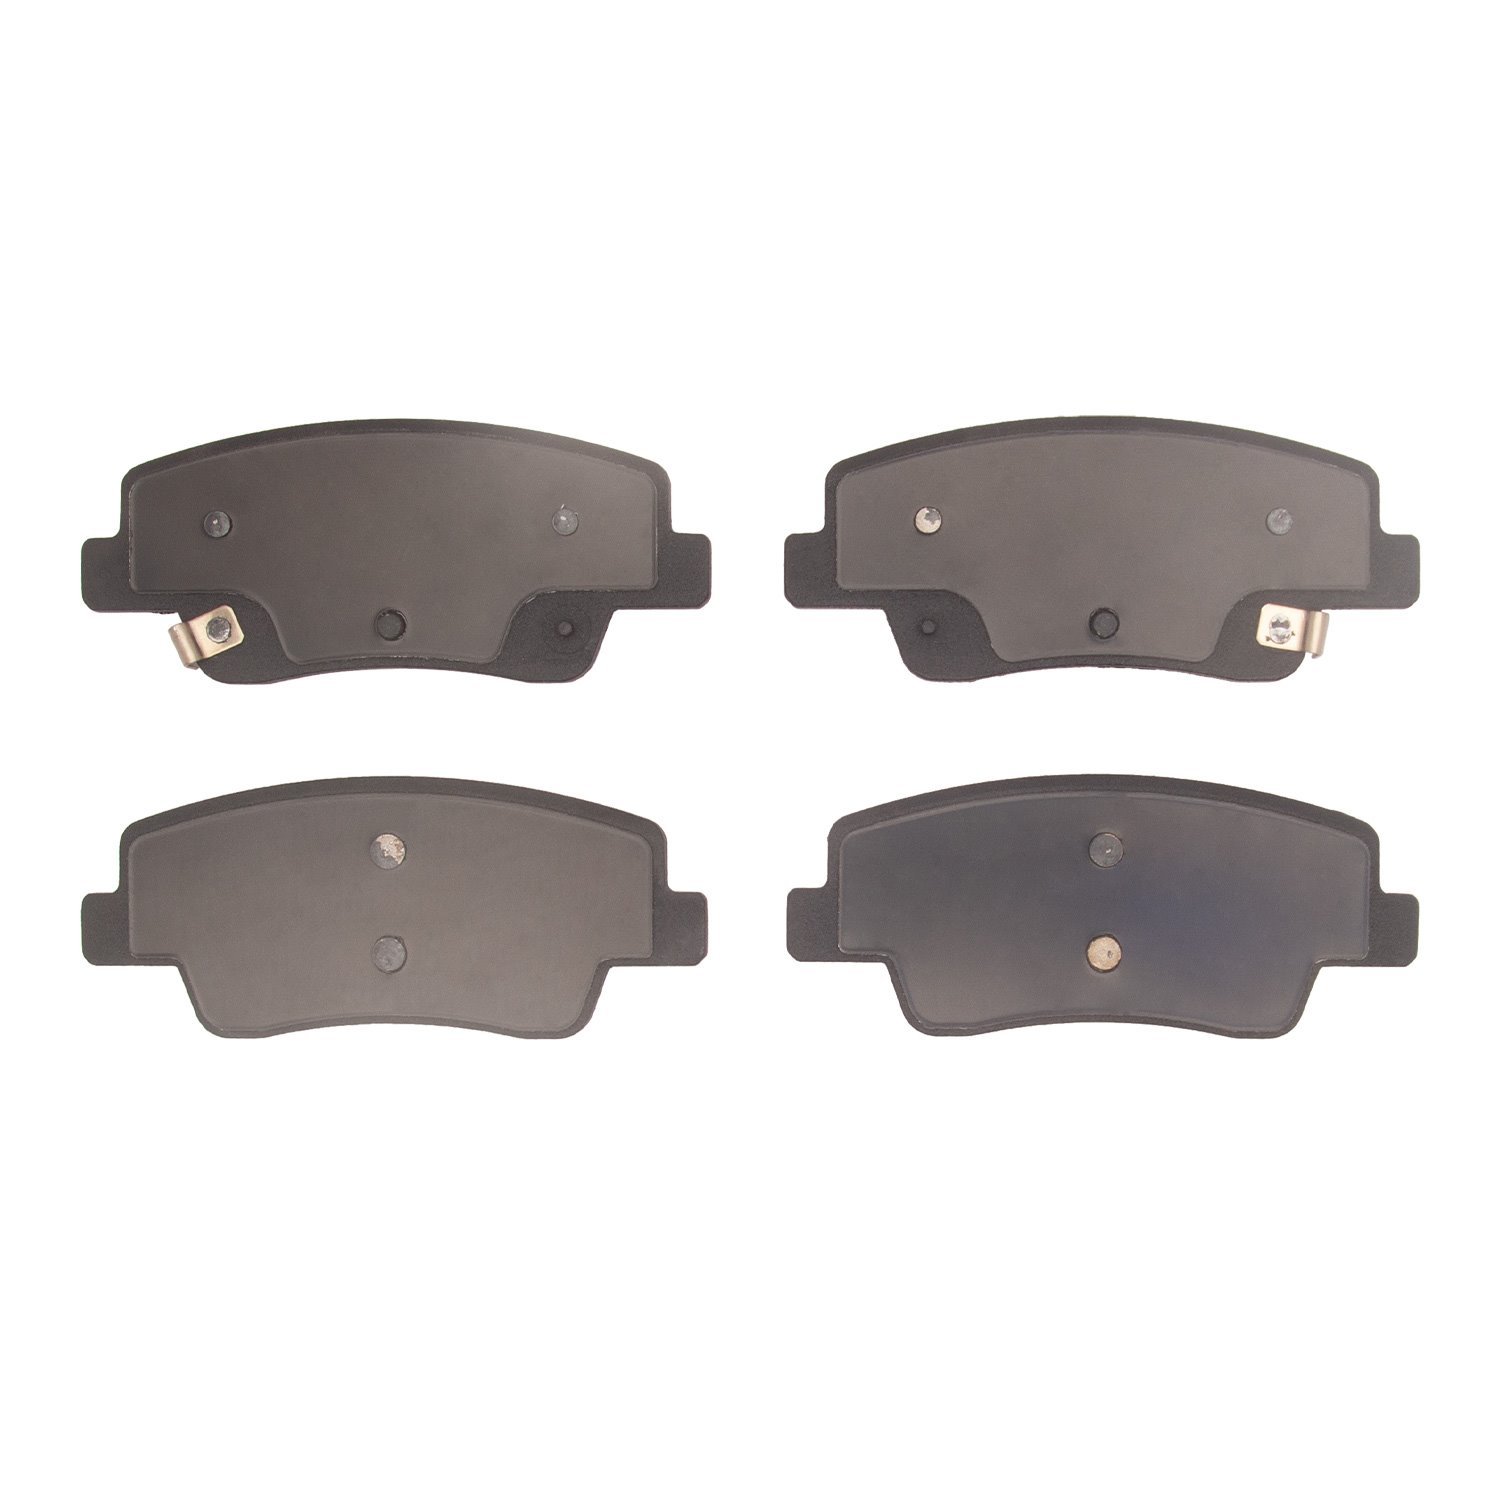 1551-2394-00 5000 Advanced Ceramic Brake Pads, Fits Select Kia/Hyundai/Genesis, Position: Rear